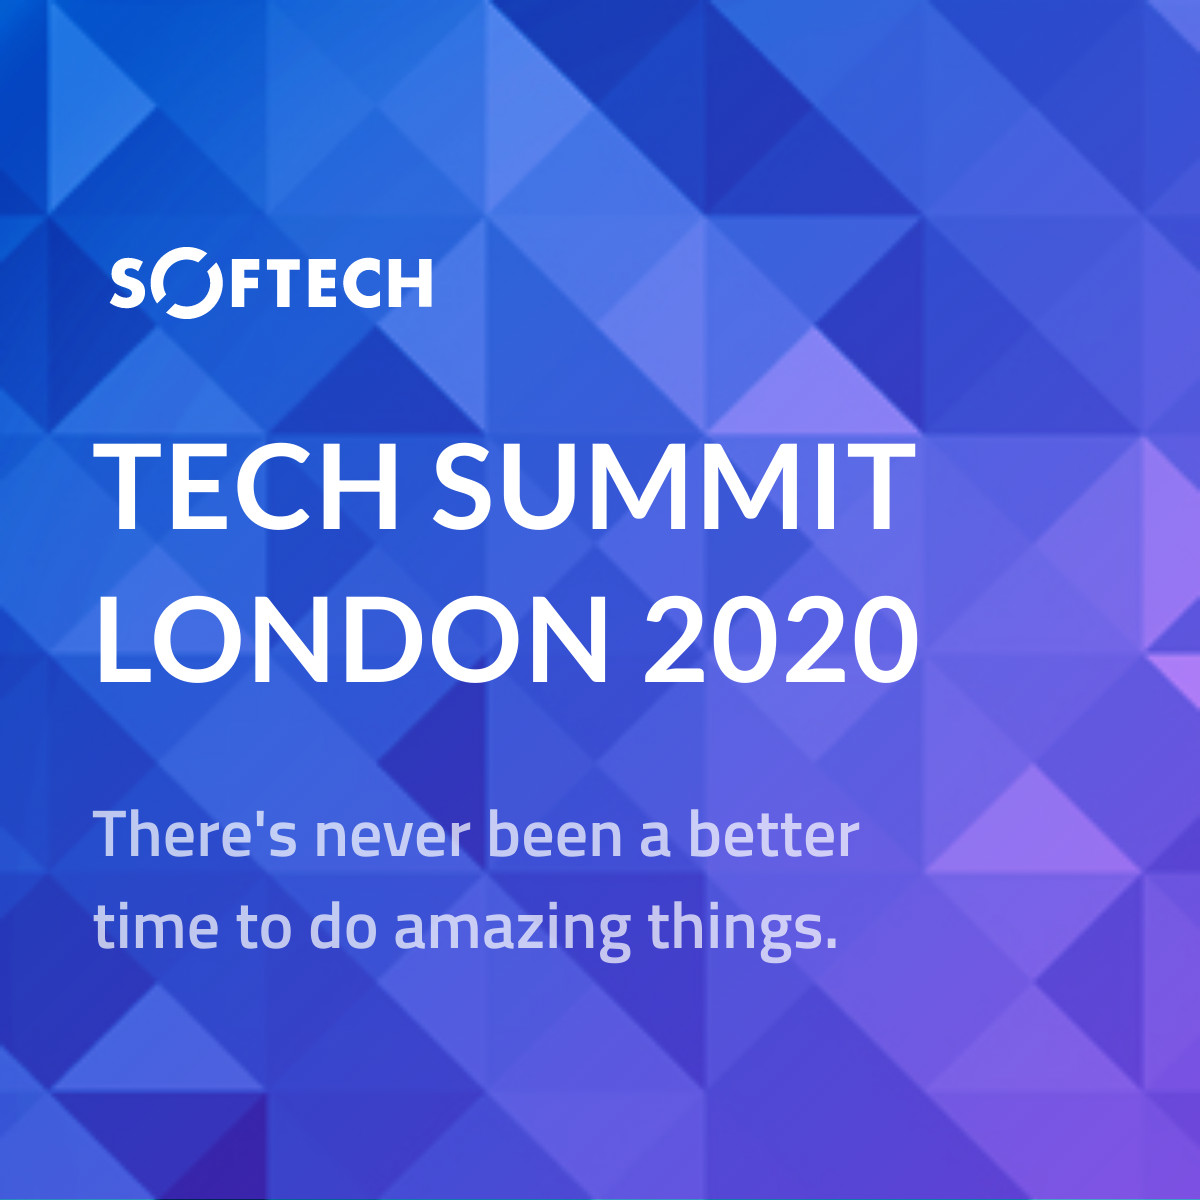 Tech Summit London 2020